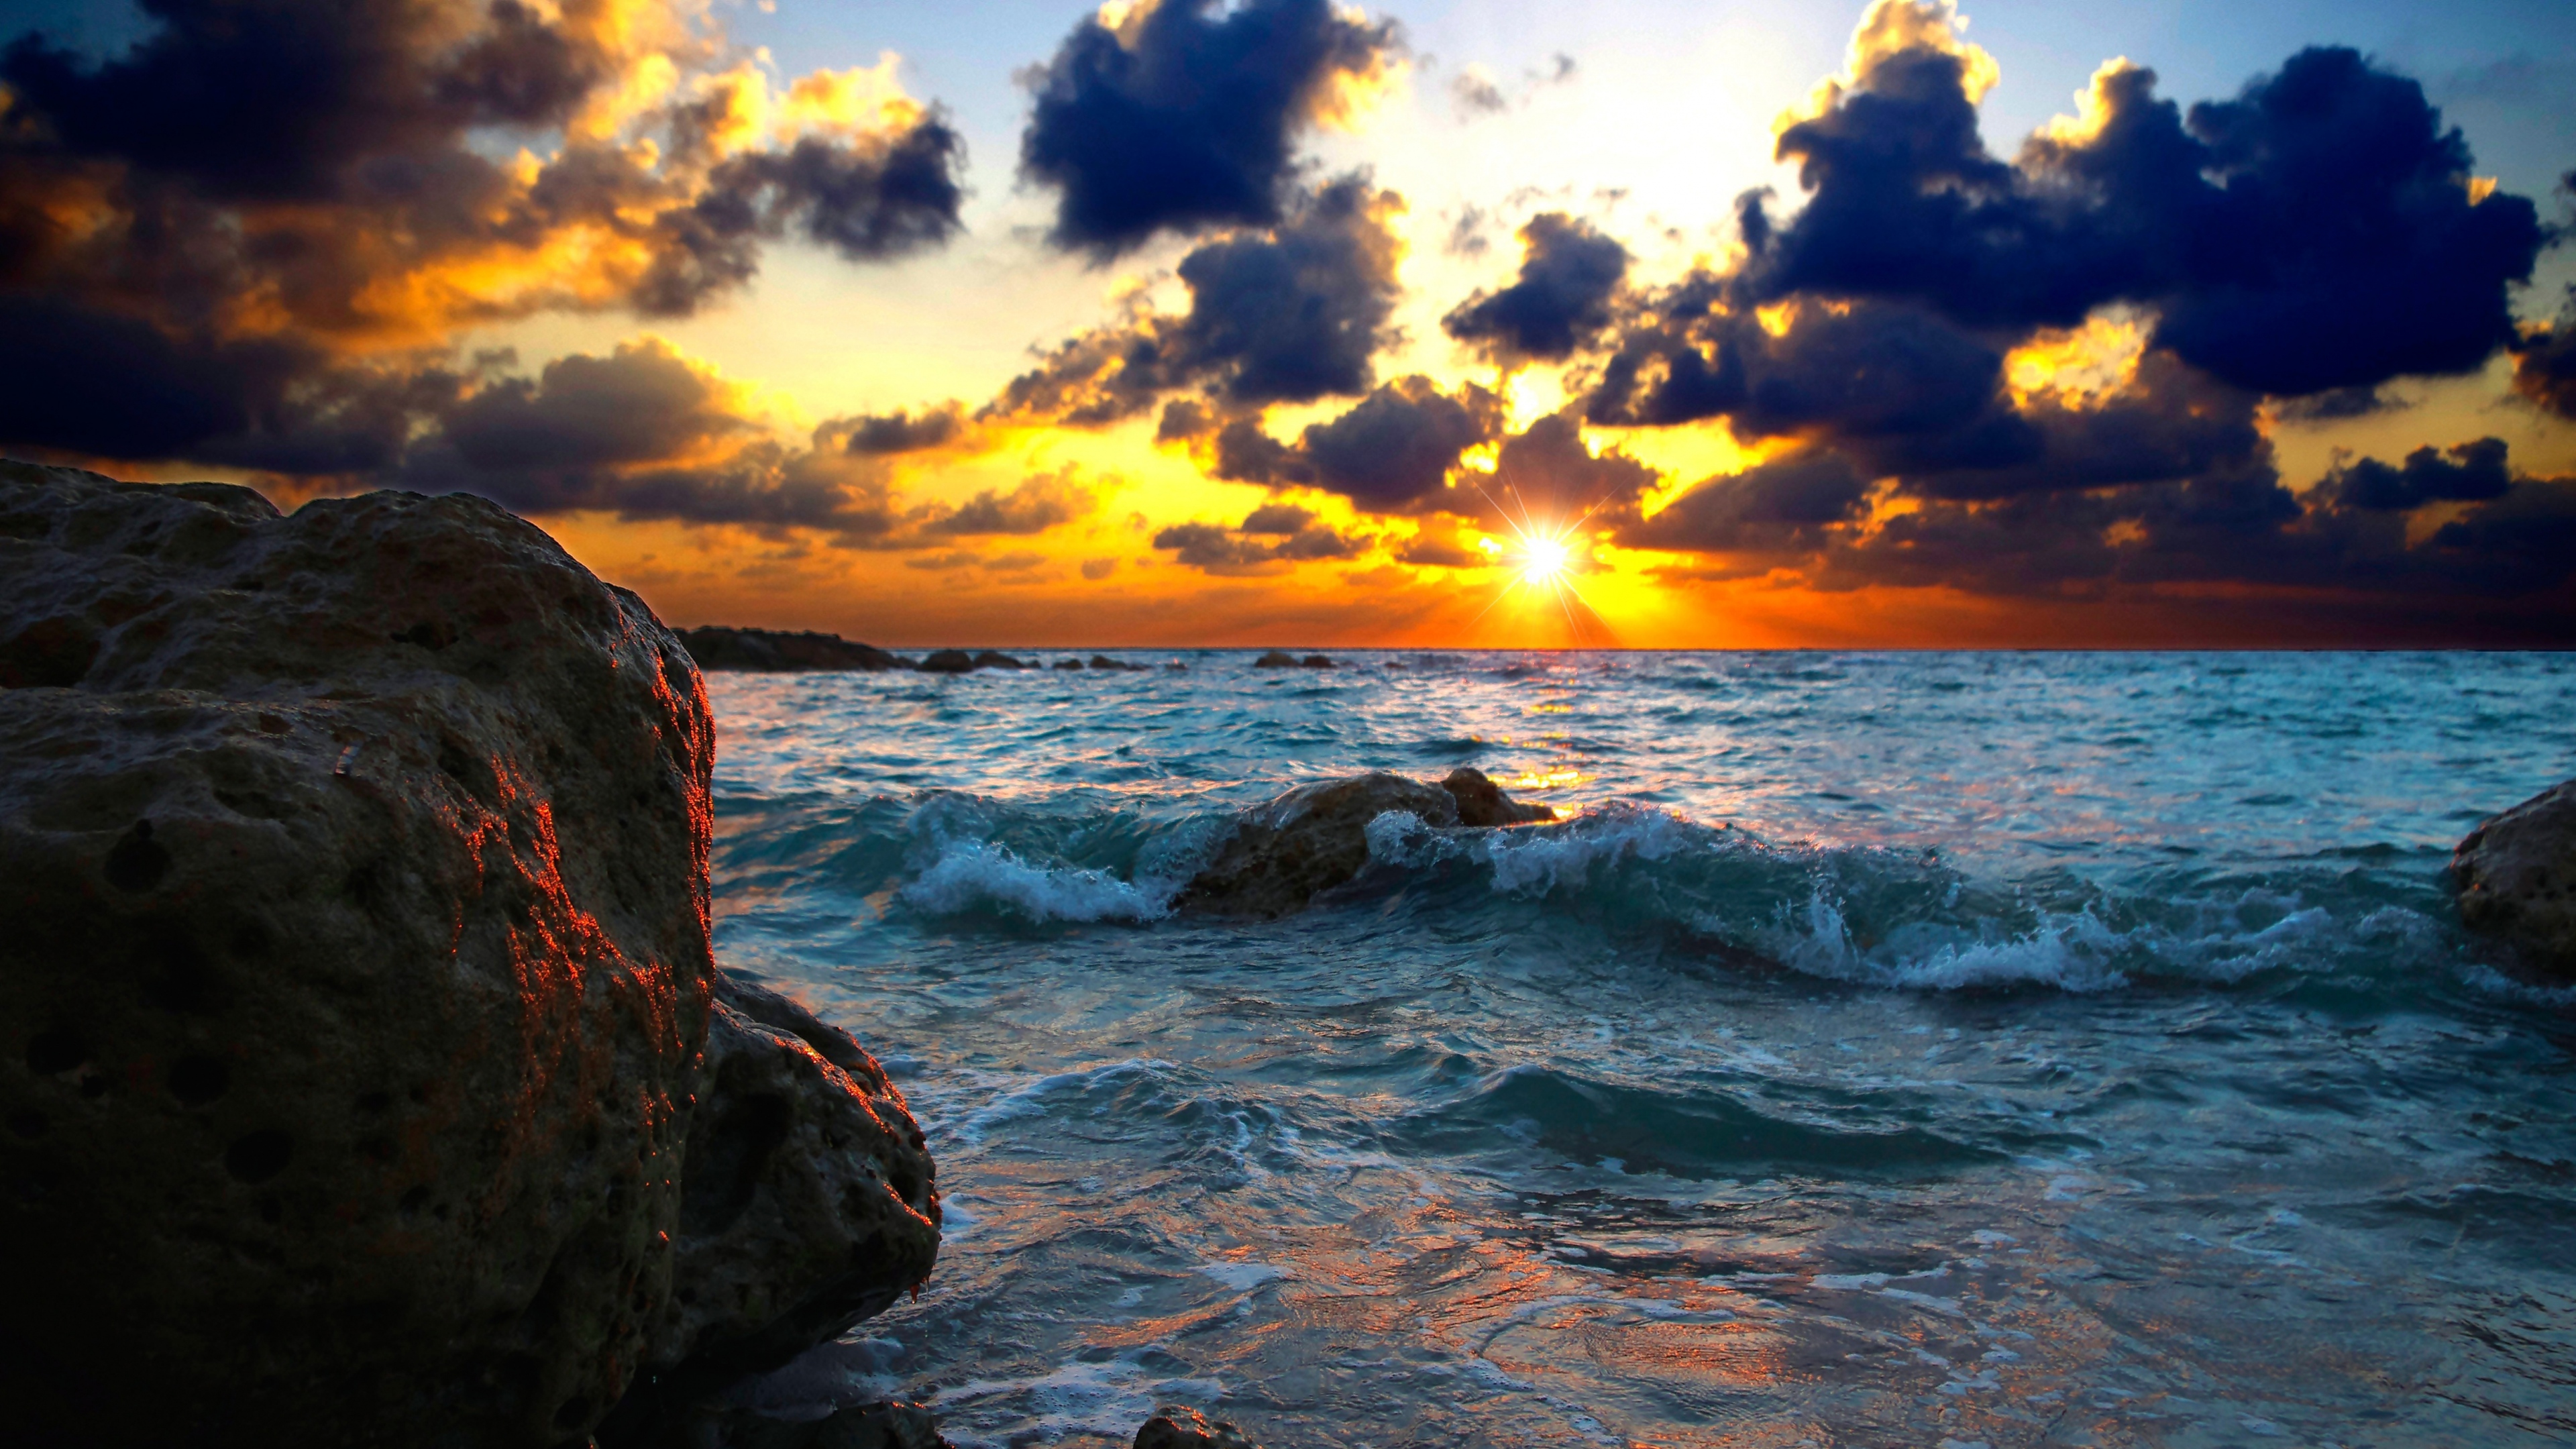 Beautiful Sunset Wallpaper over the Sea in Croatia Free Stock Photo   picjumbo